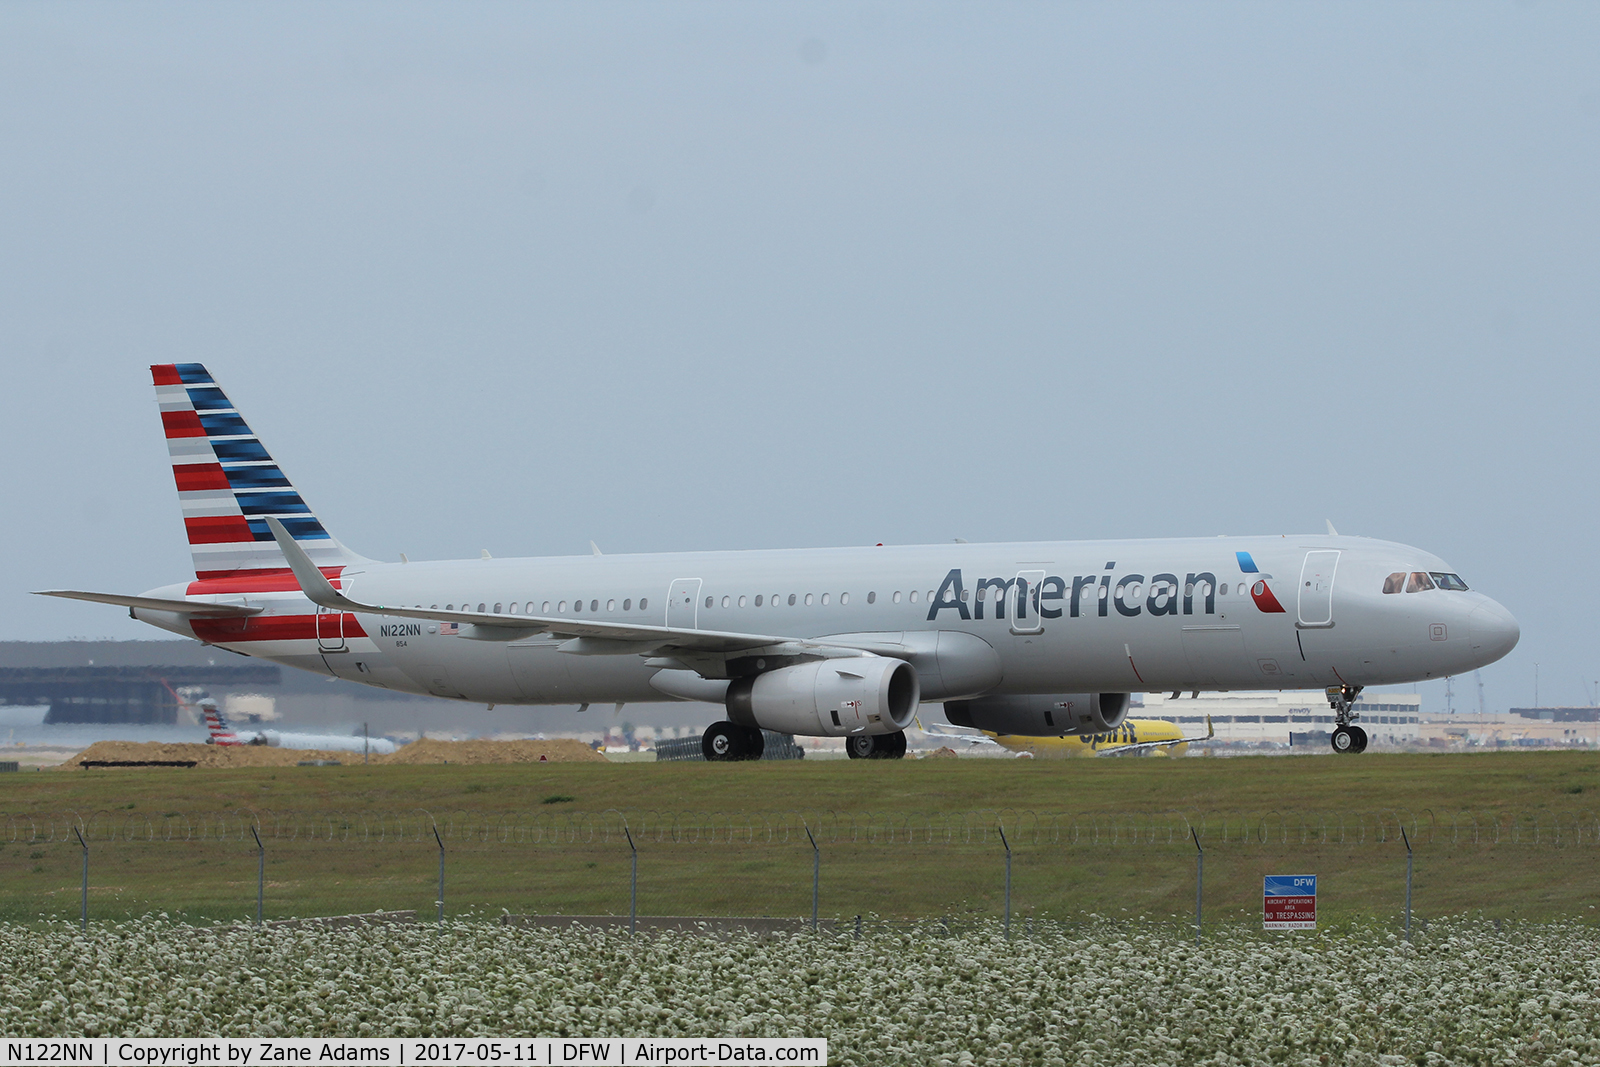 N122NN, 2014 Airbus A321-231 C/N 6252, Arriving at DFW Airport